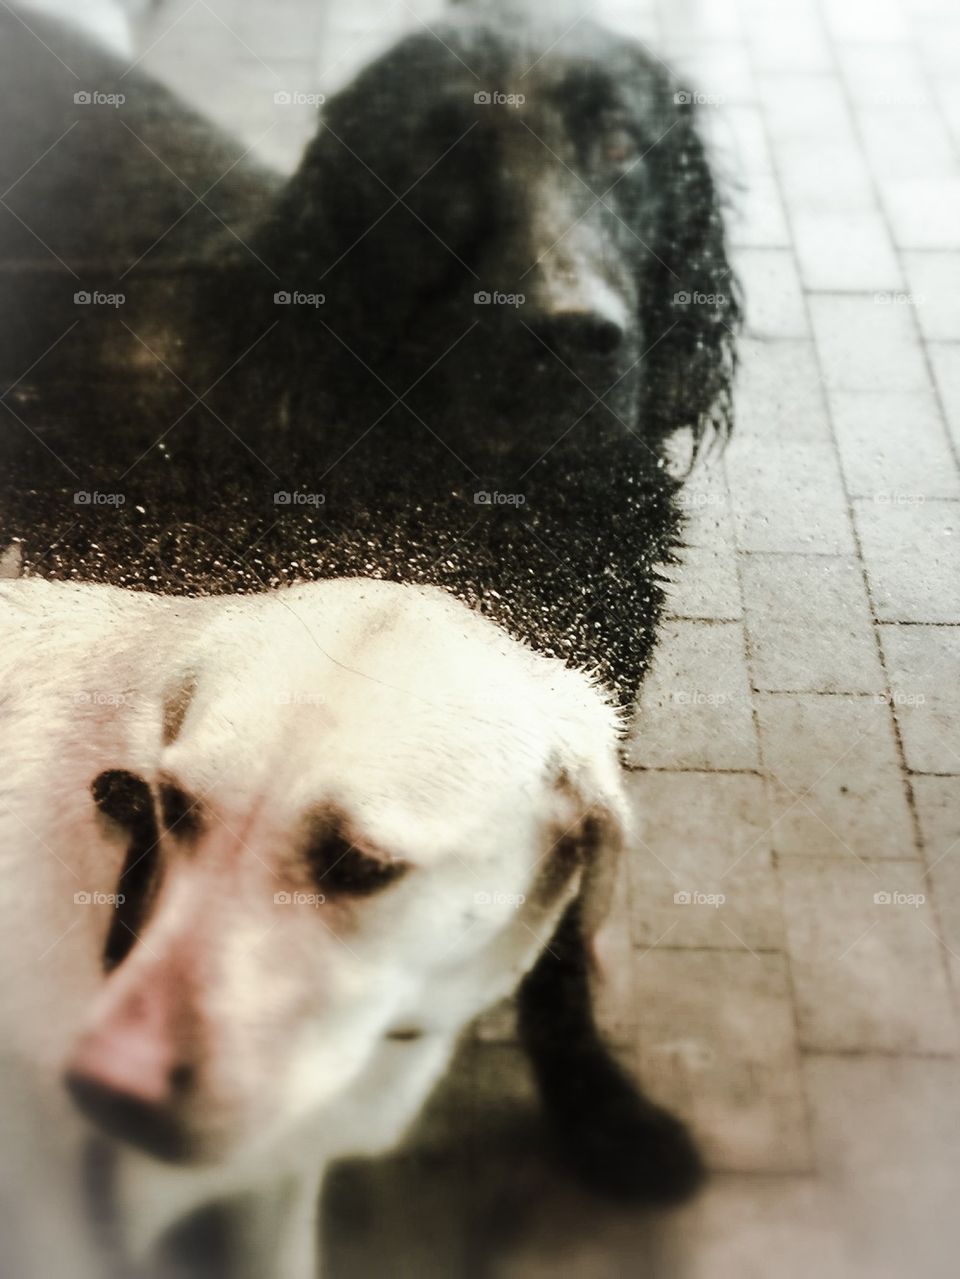 Sad dogs in rain